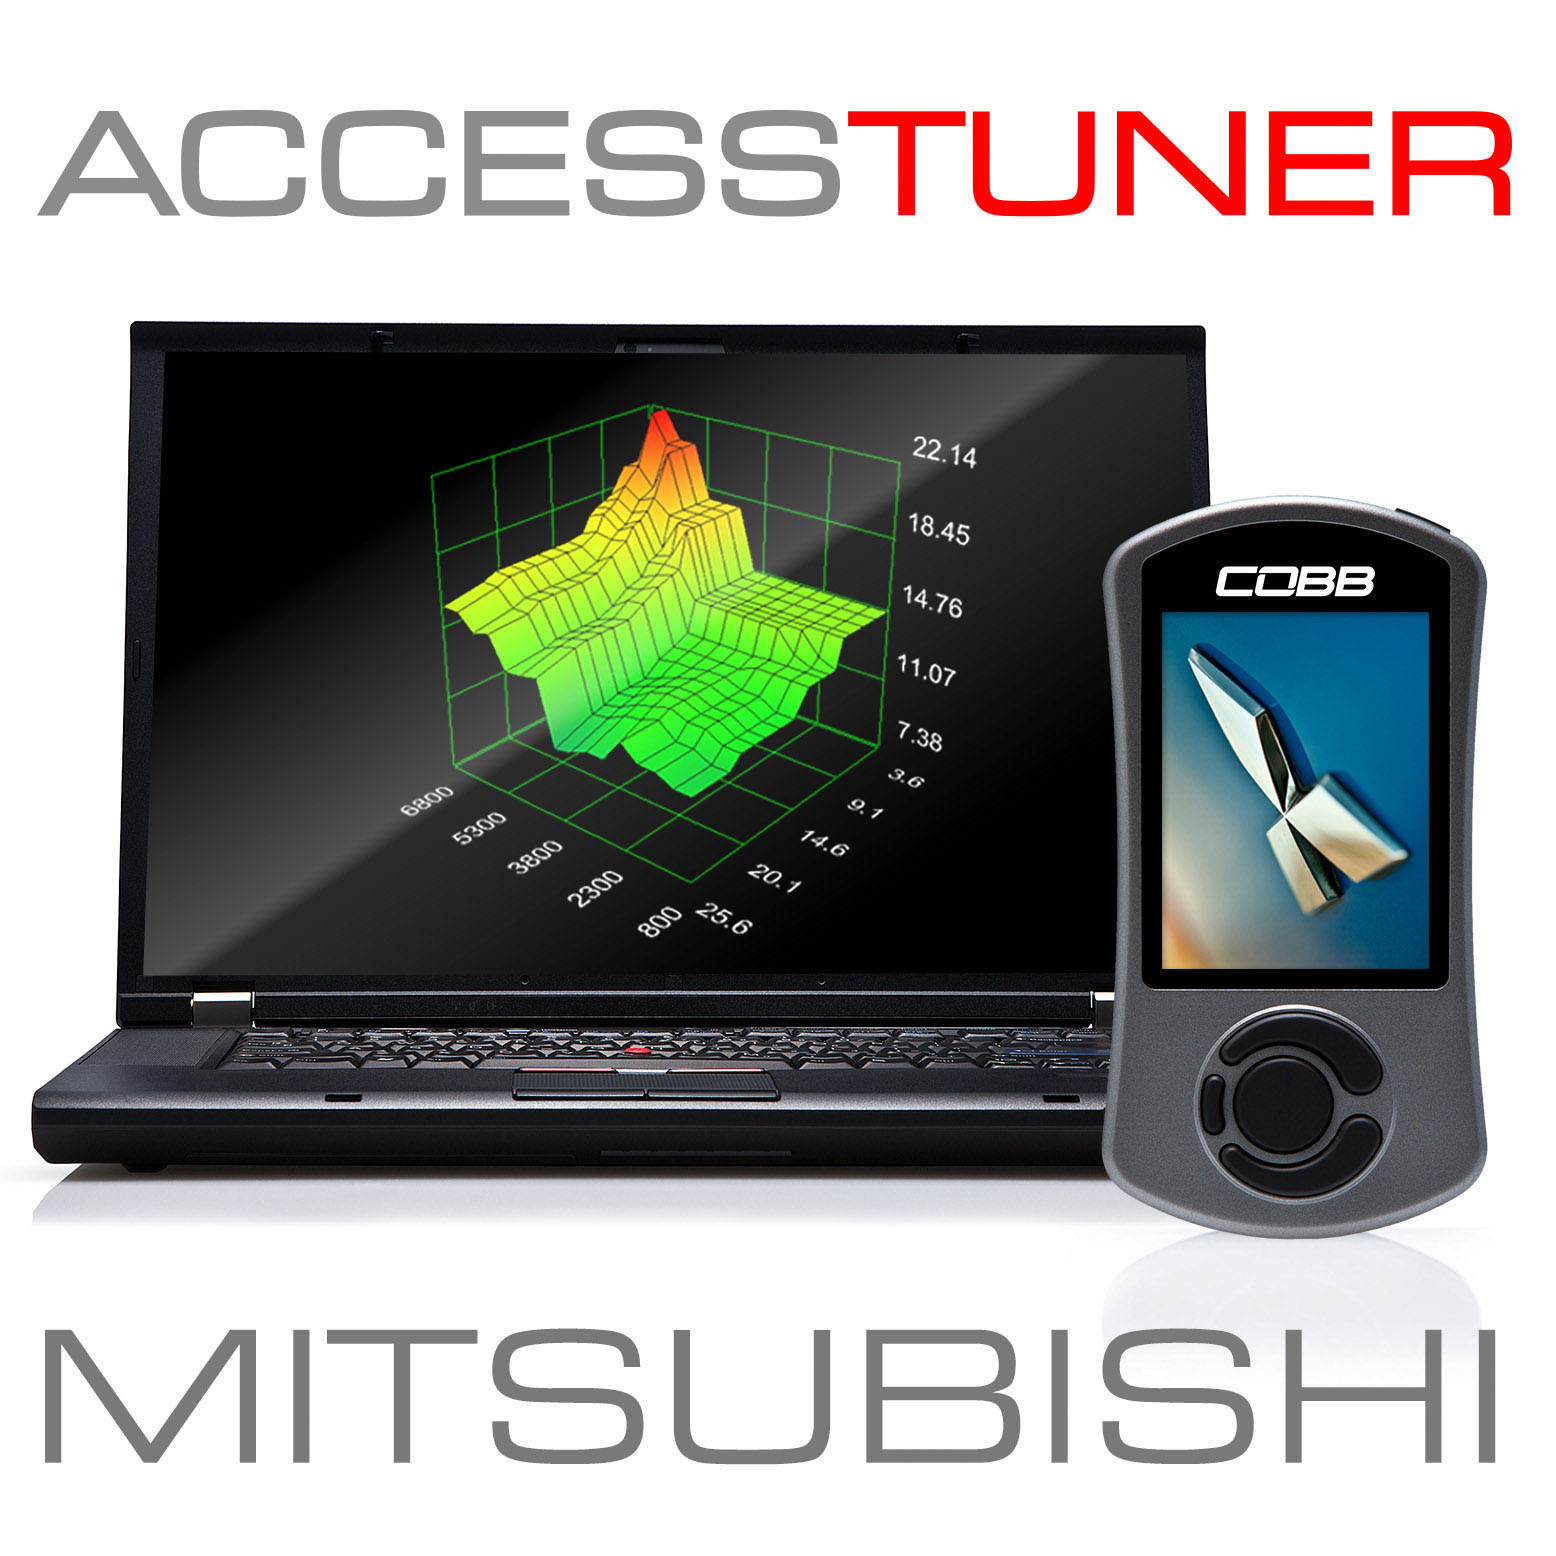 Mitsubishi Accesstuner